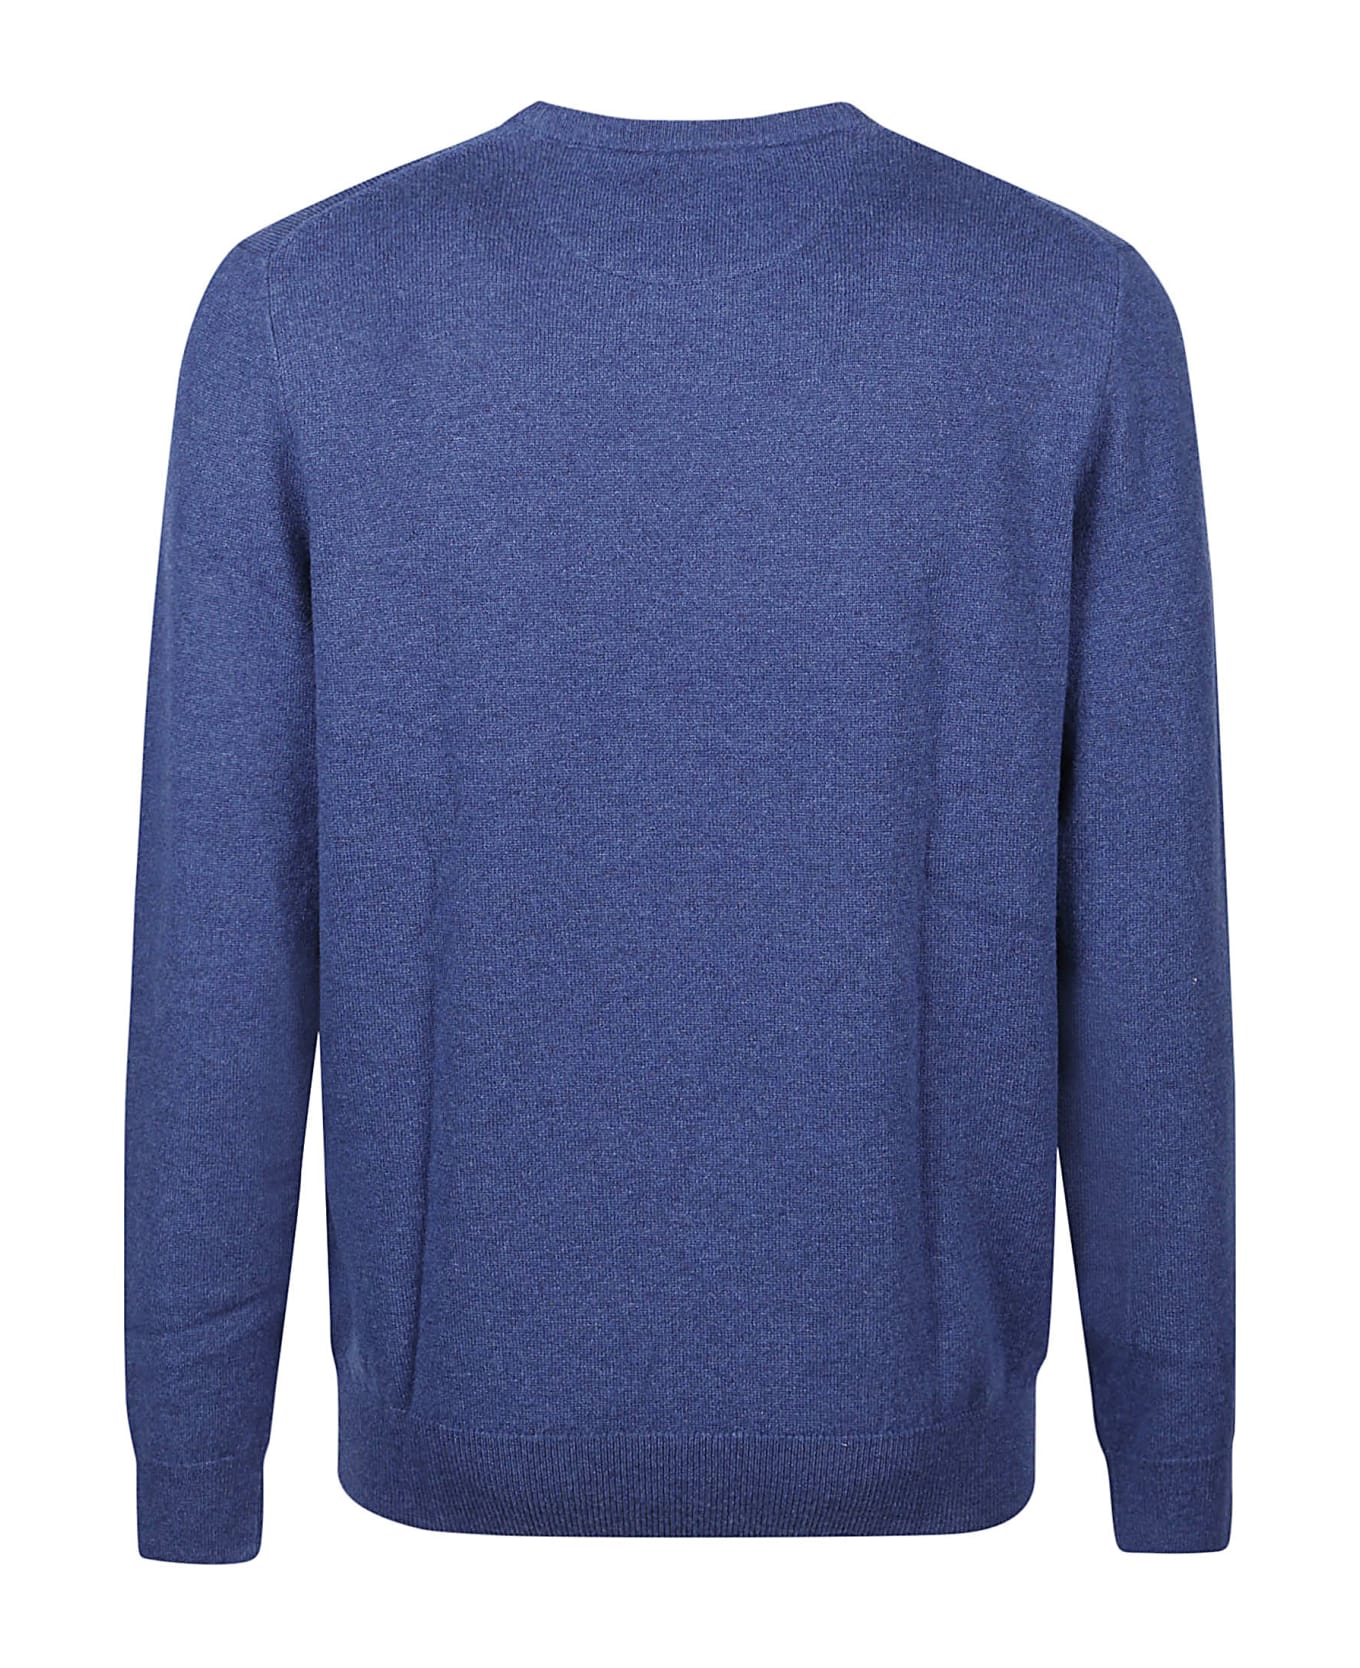 Polo Ralph Lauren Long Sleeve Sweater - Rustic Navy ニットウェア